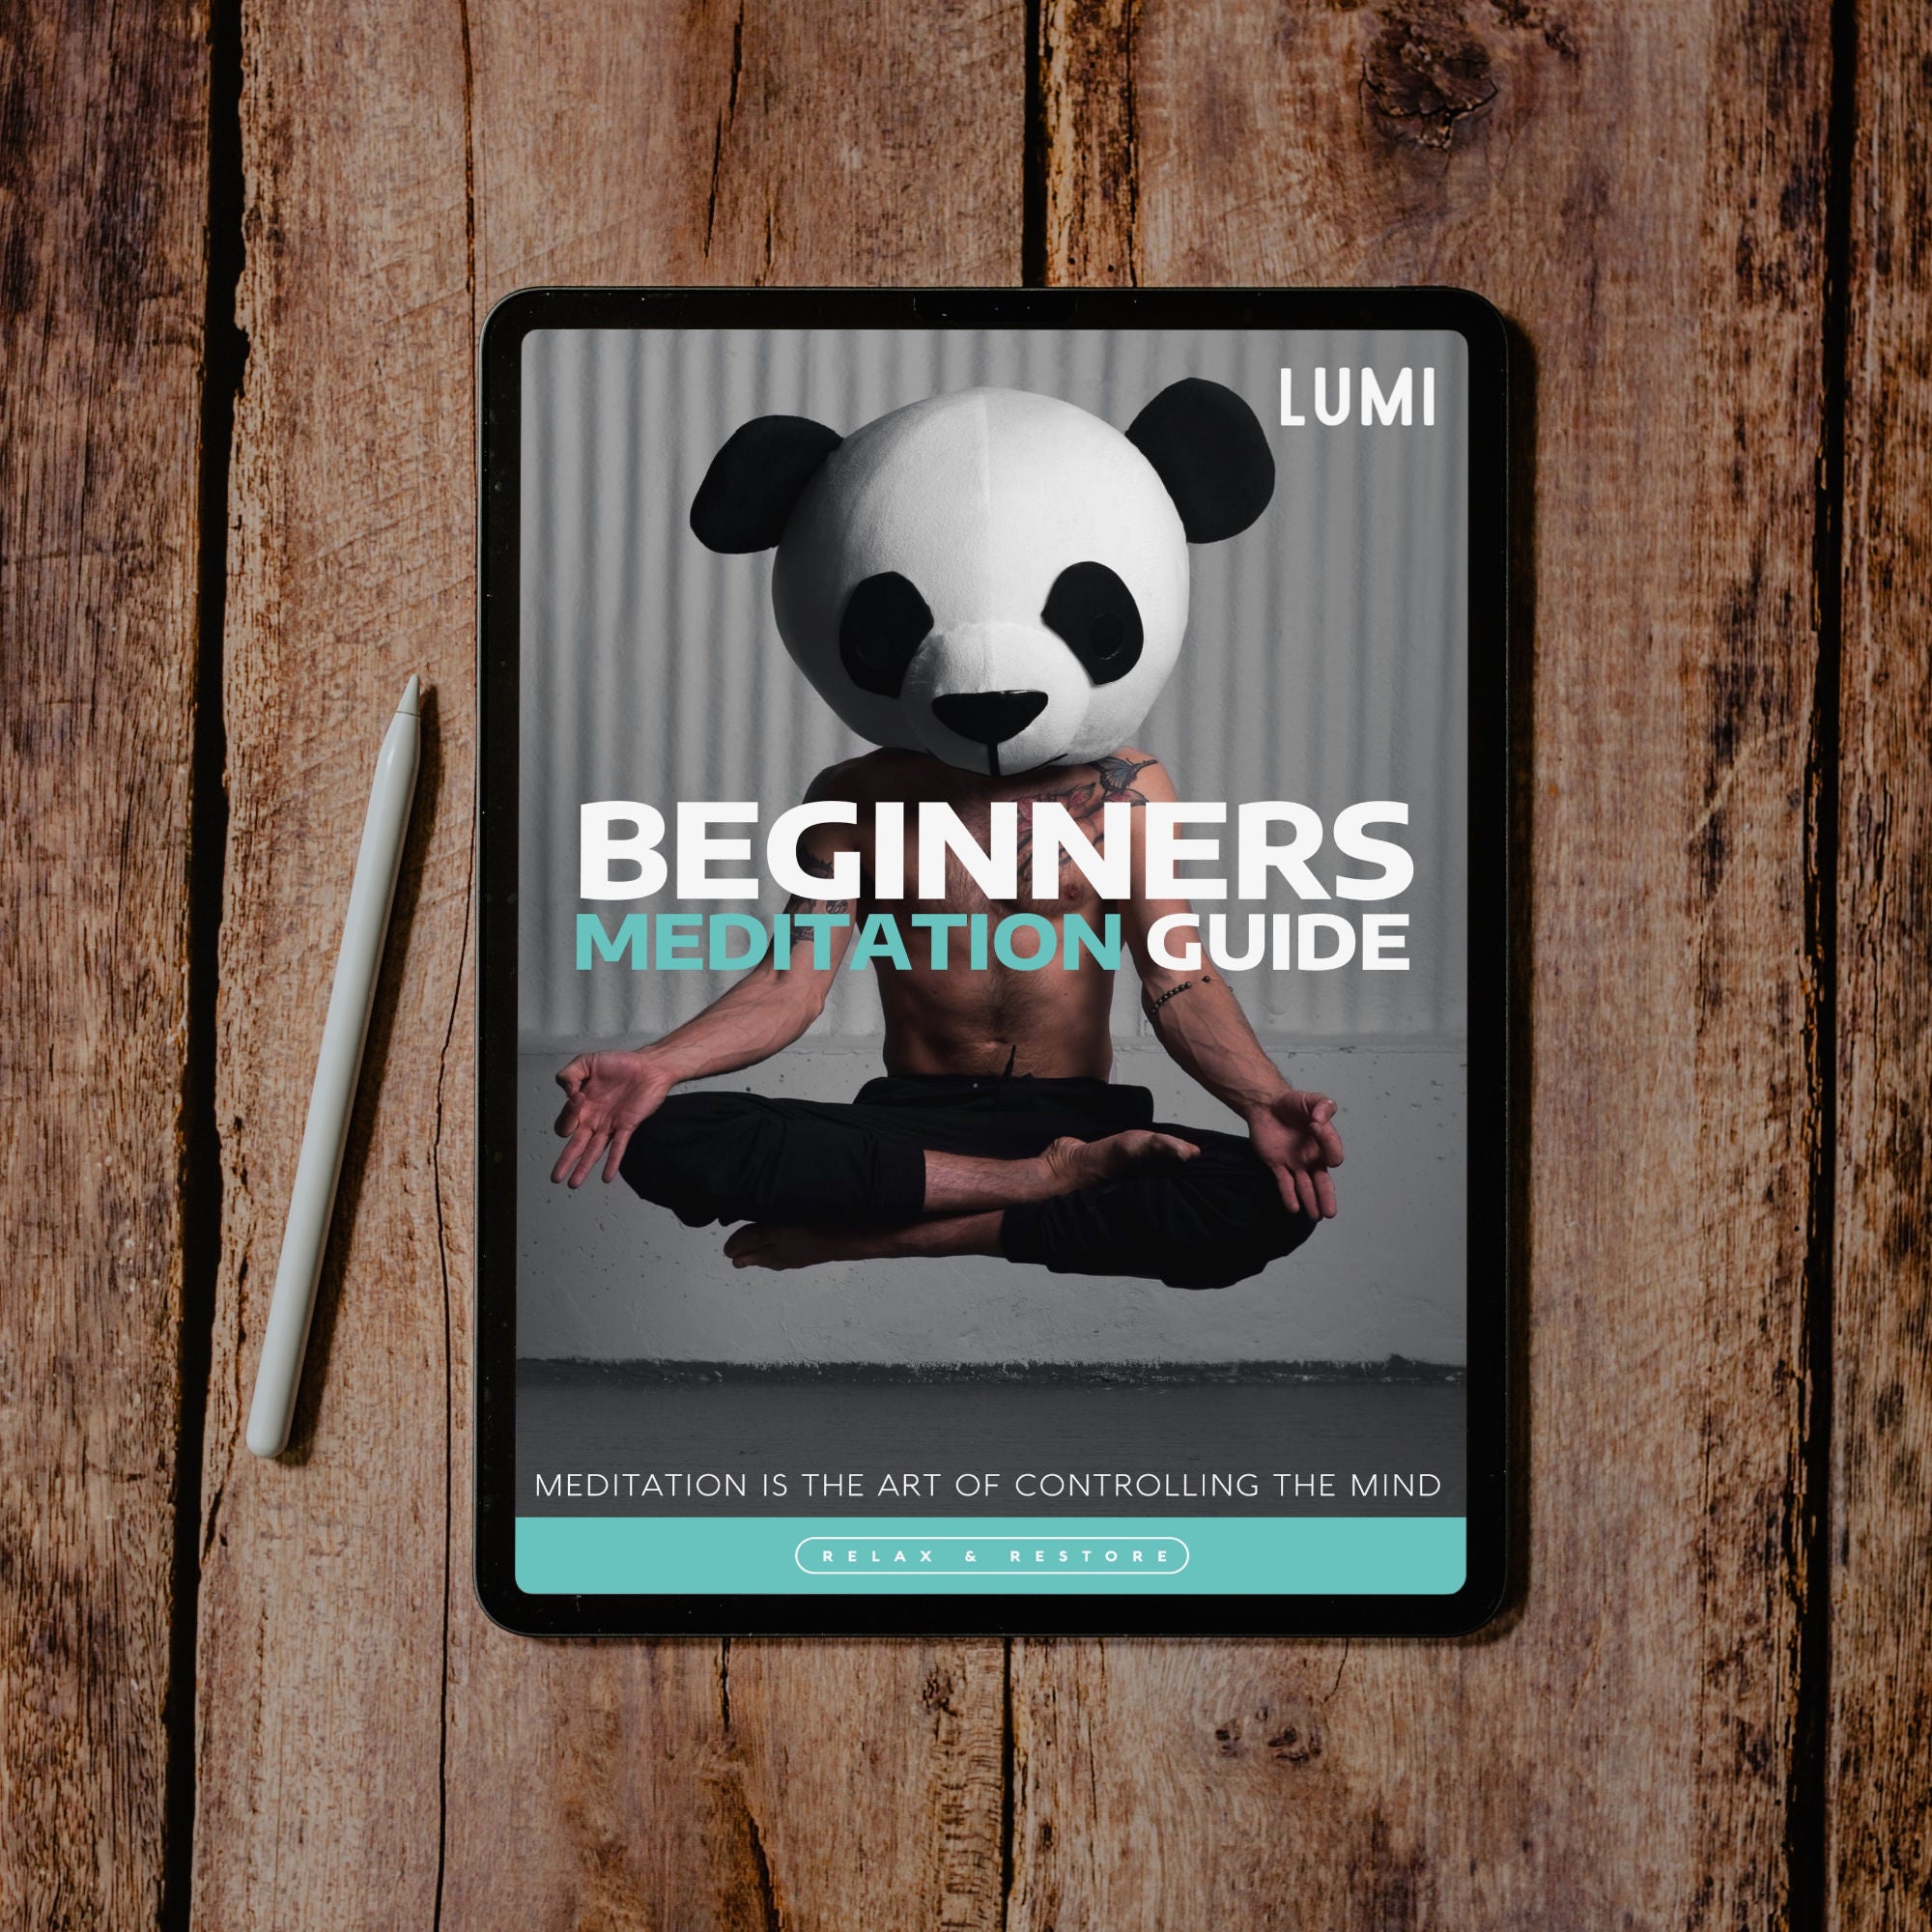 Lumi Meditation Guide on iPad scene with iPencil